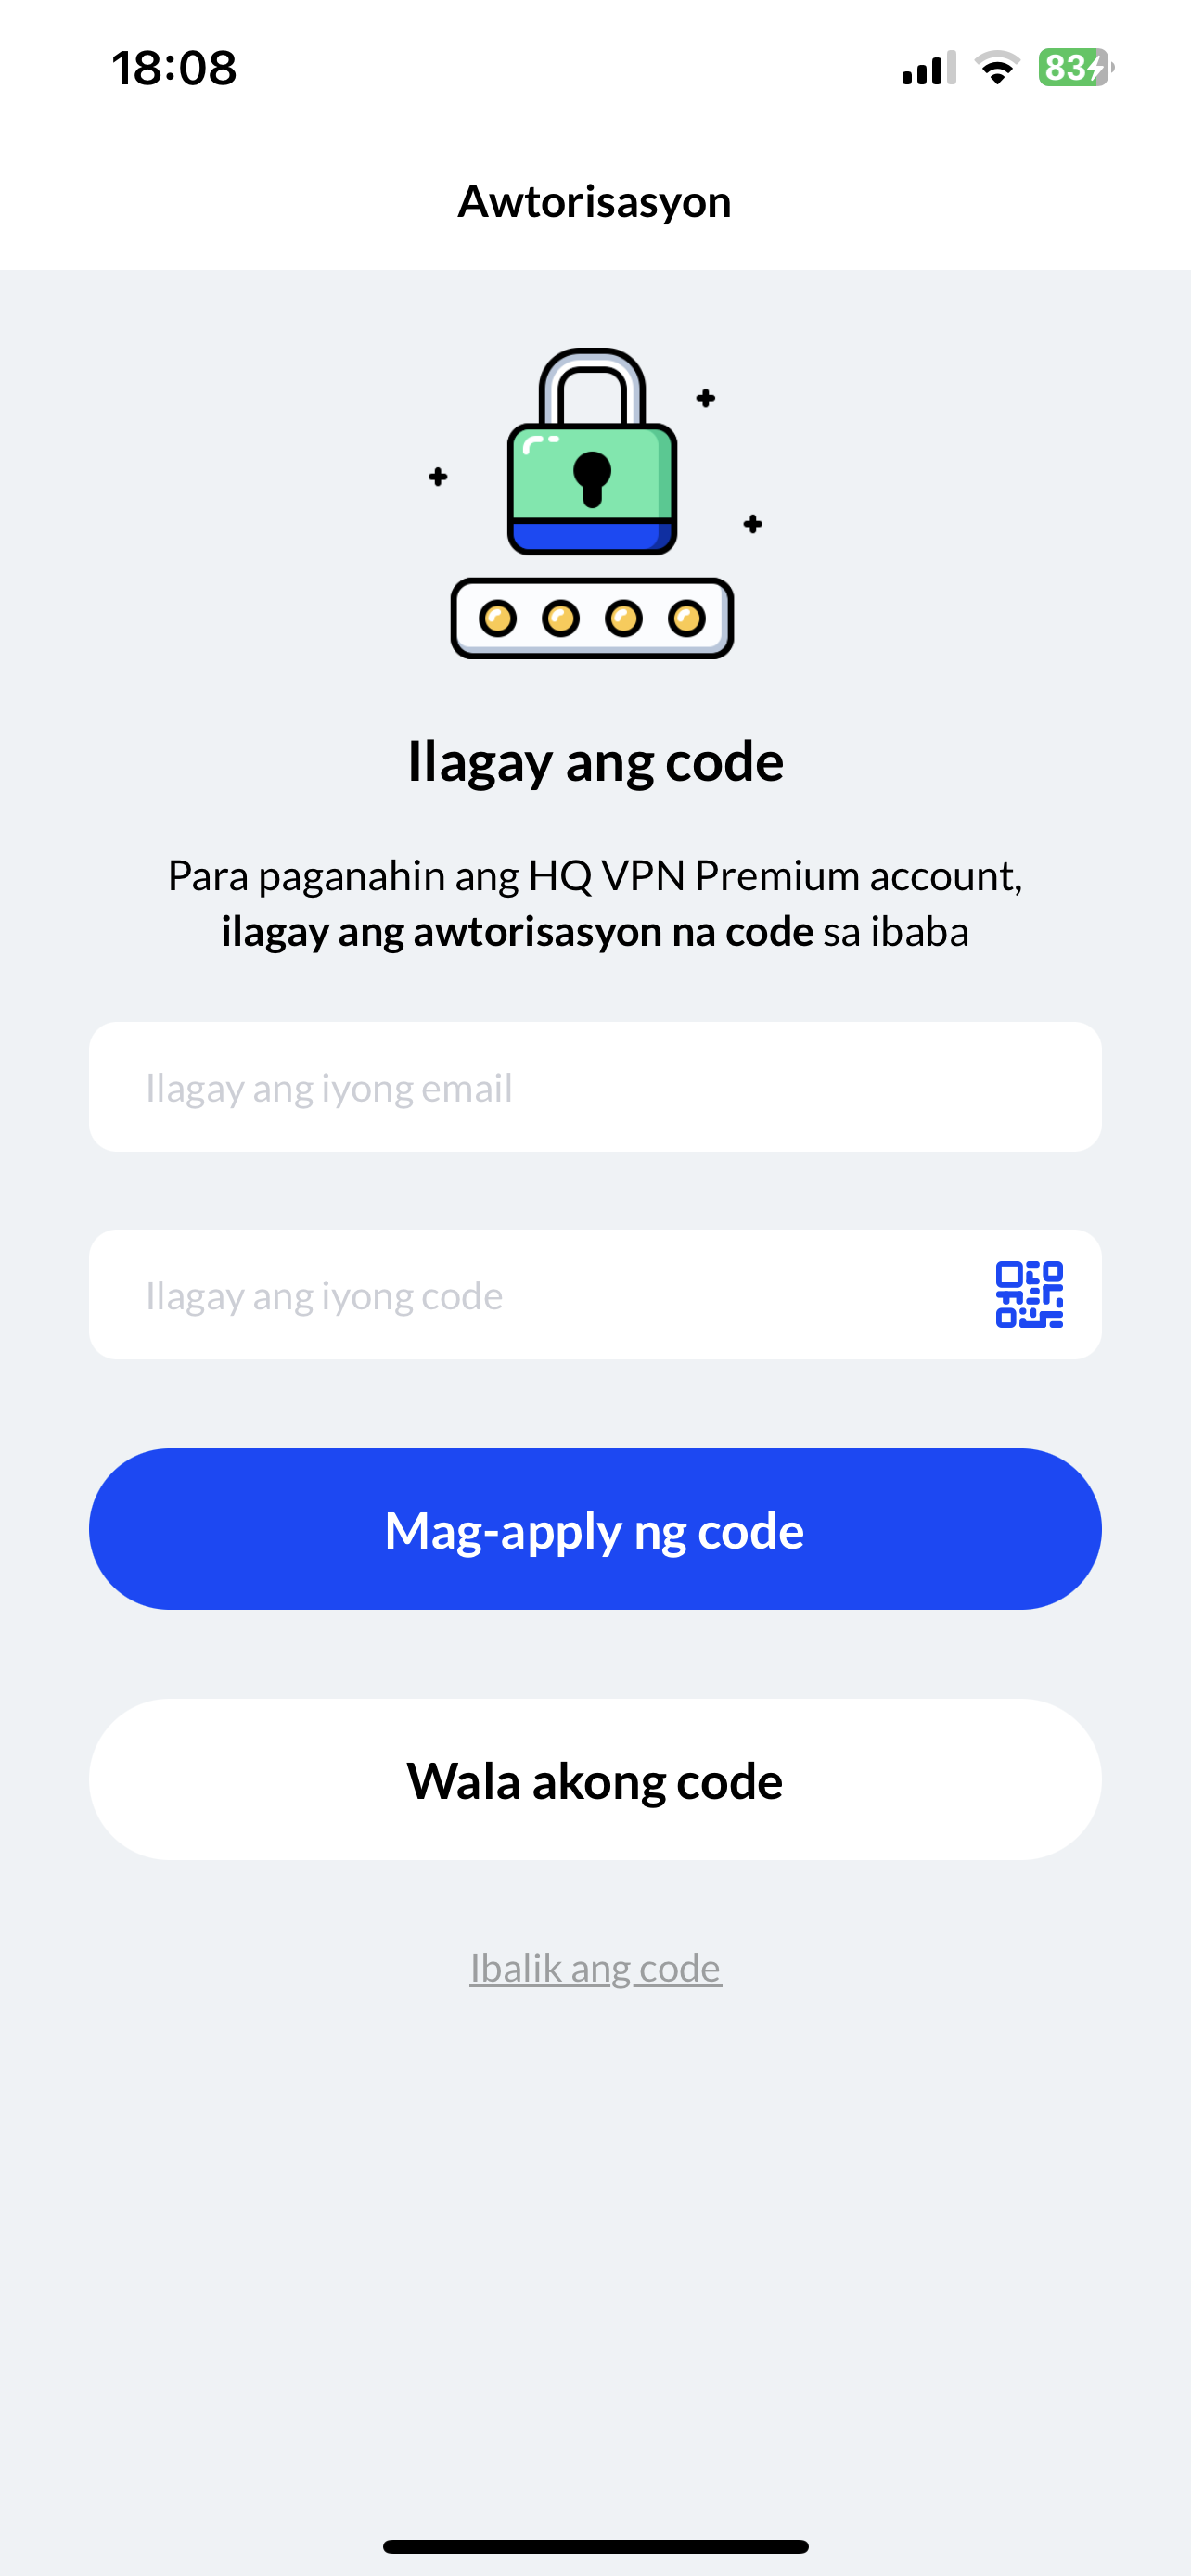 Ilagay ang authorization code